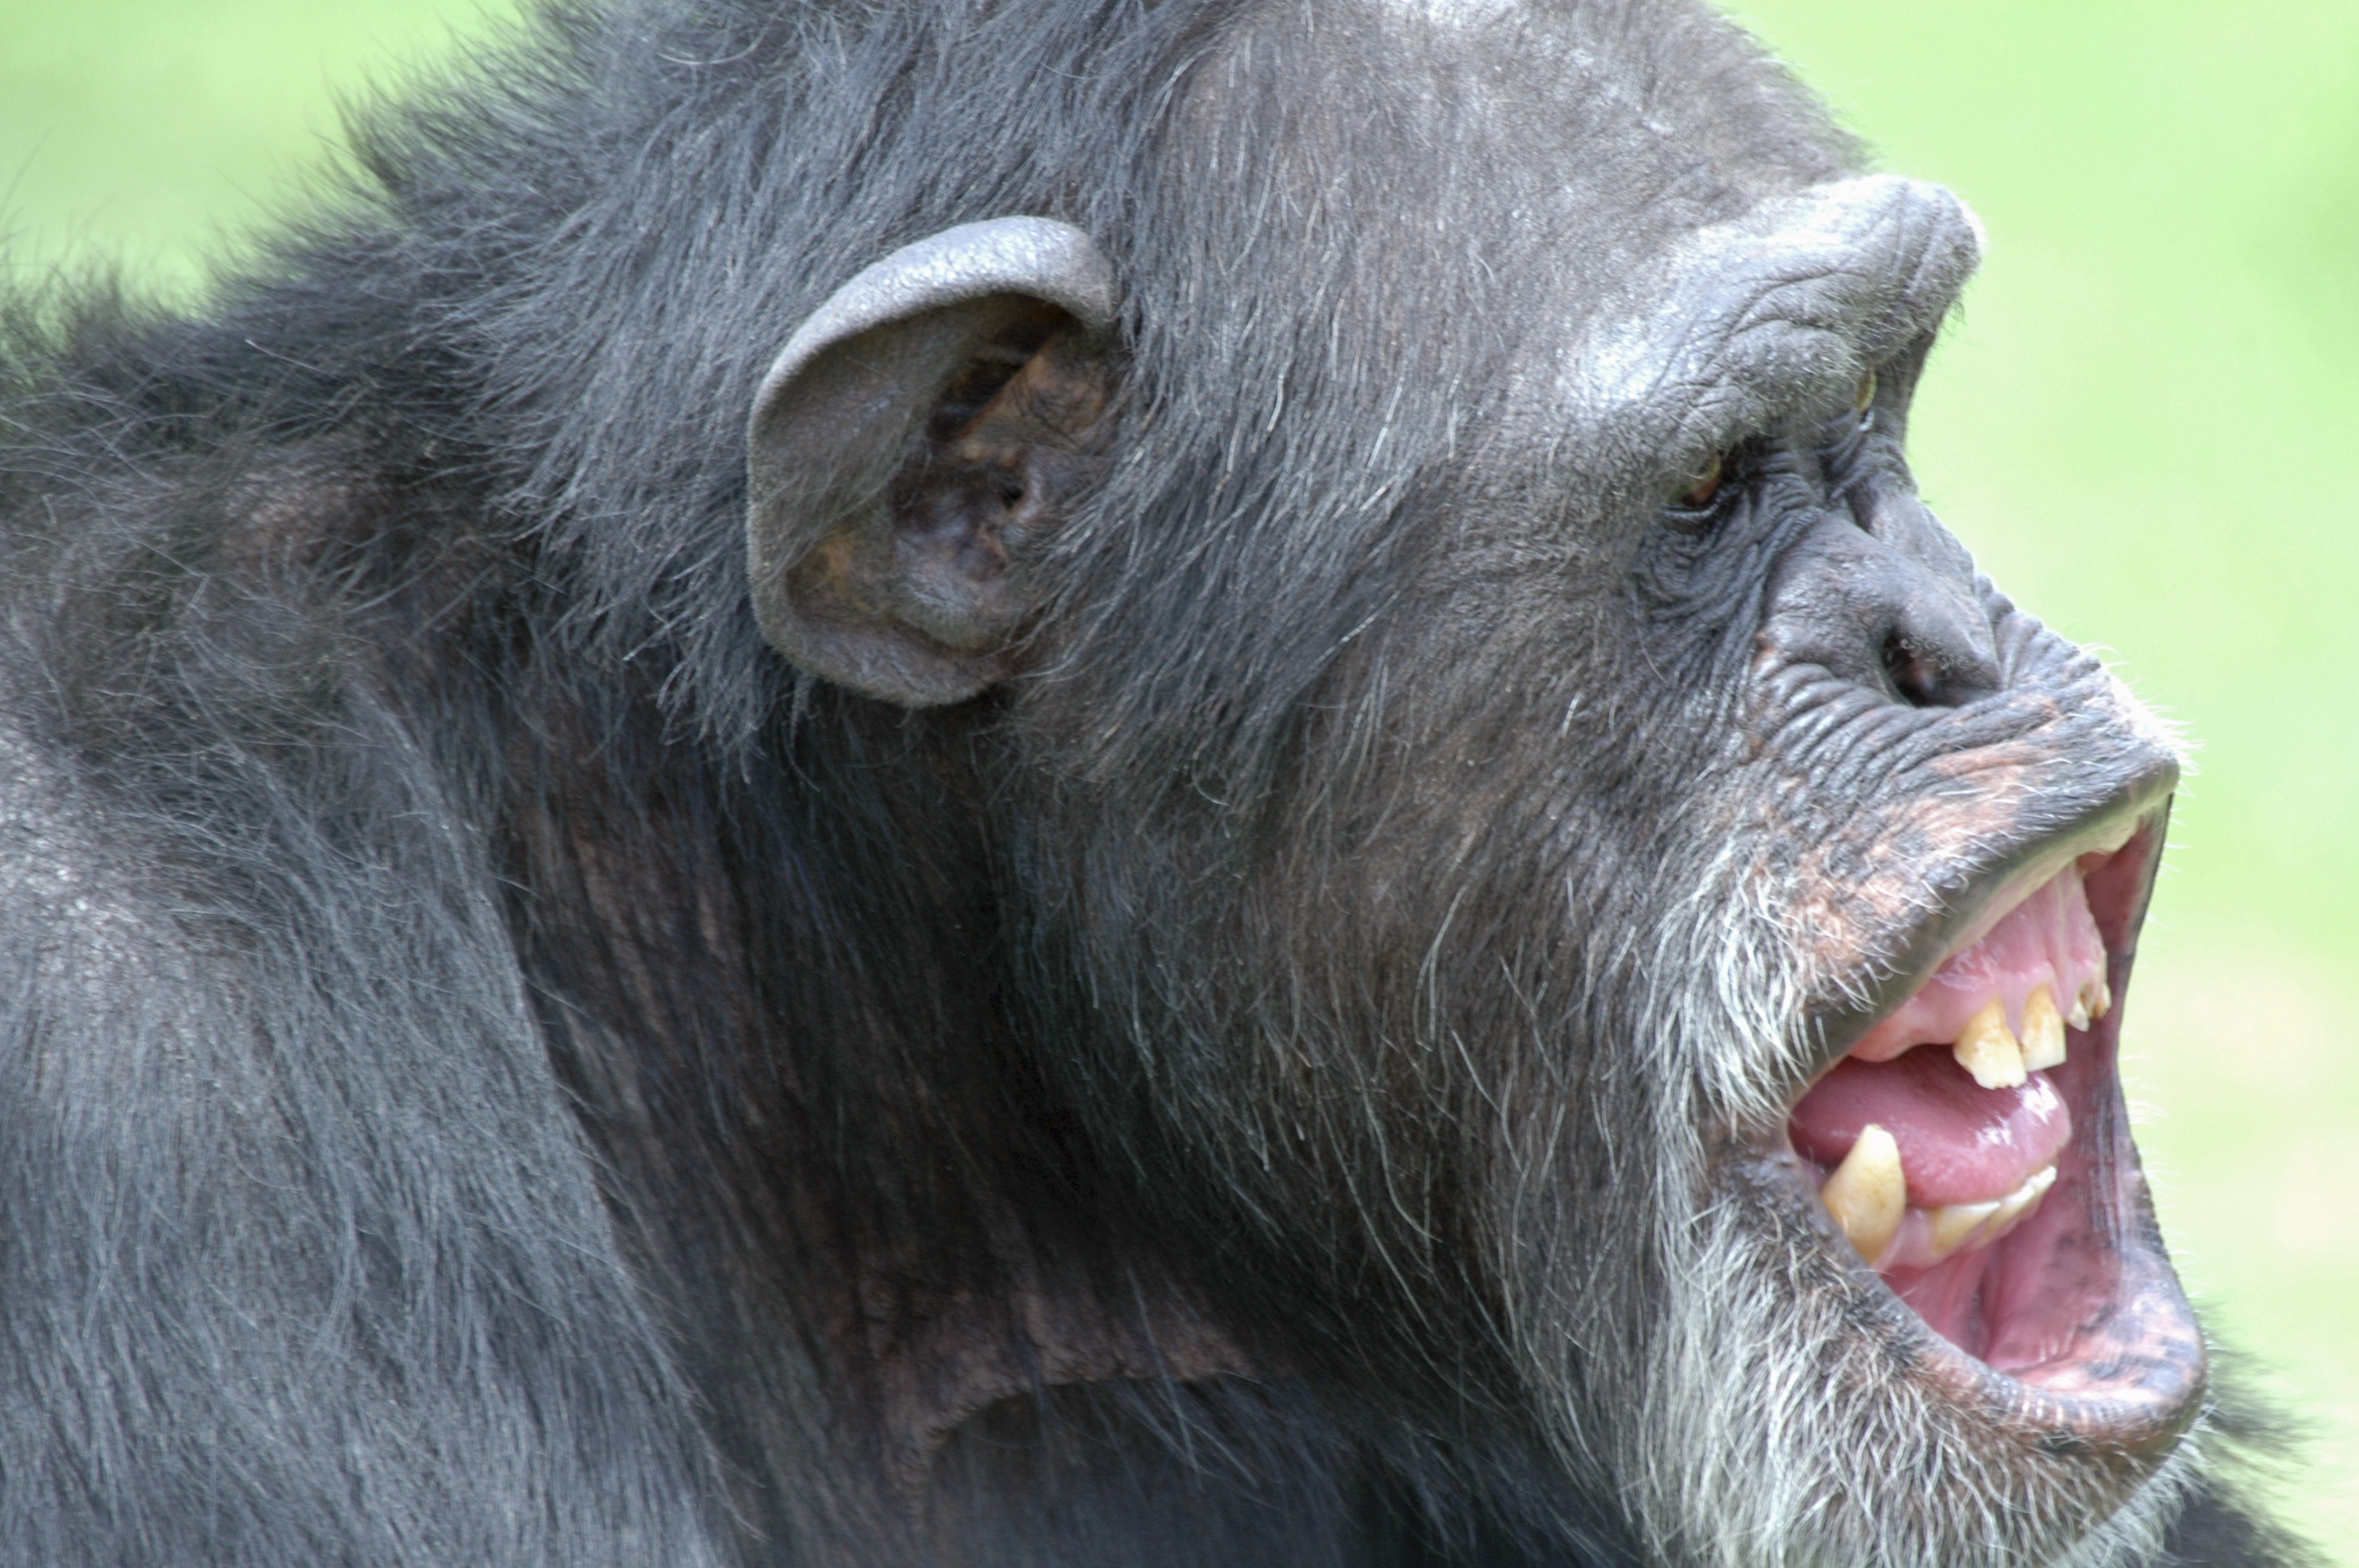 Uganda is home to wild chimps